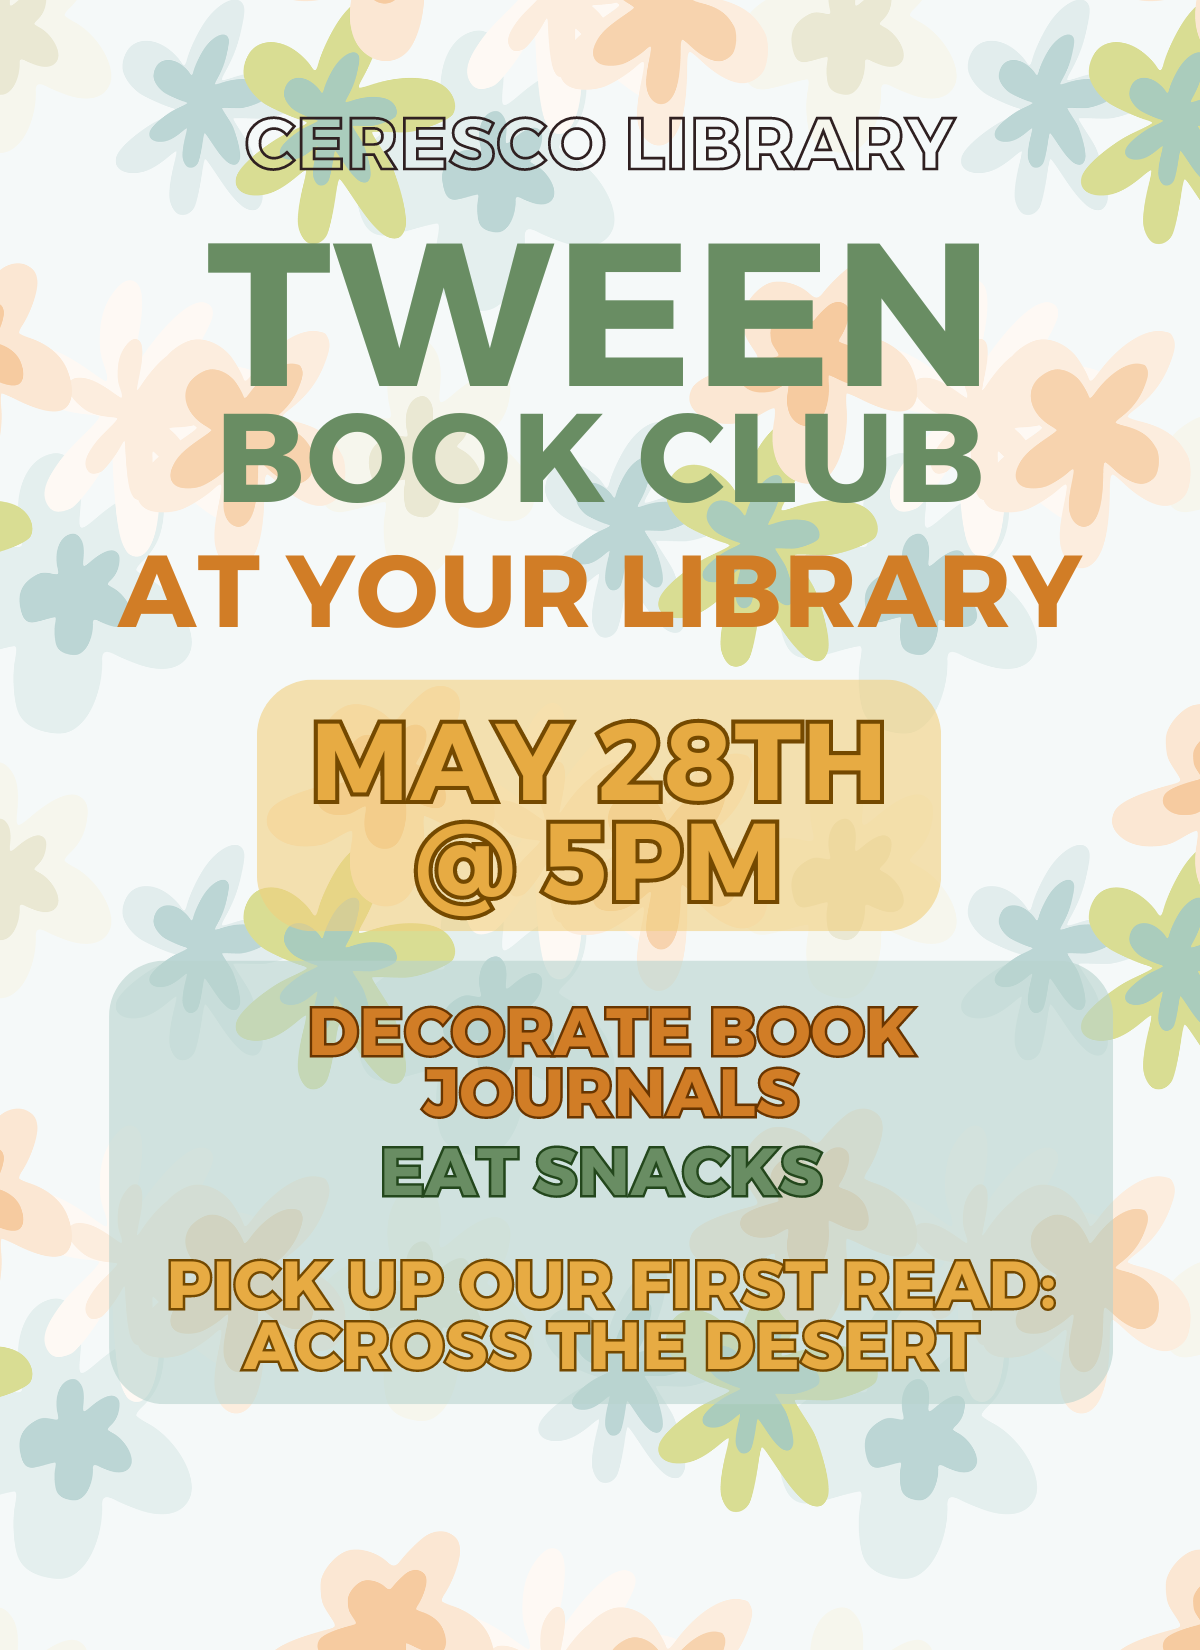 Tween Book Club